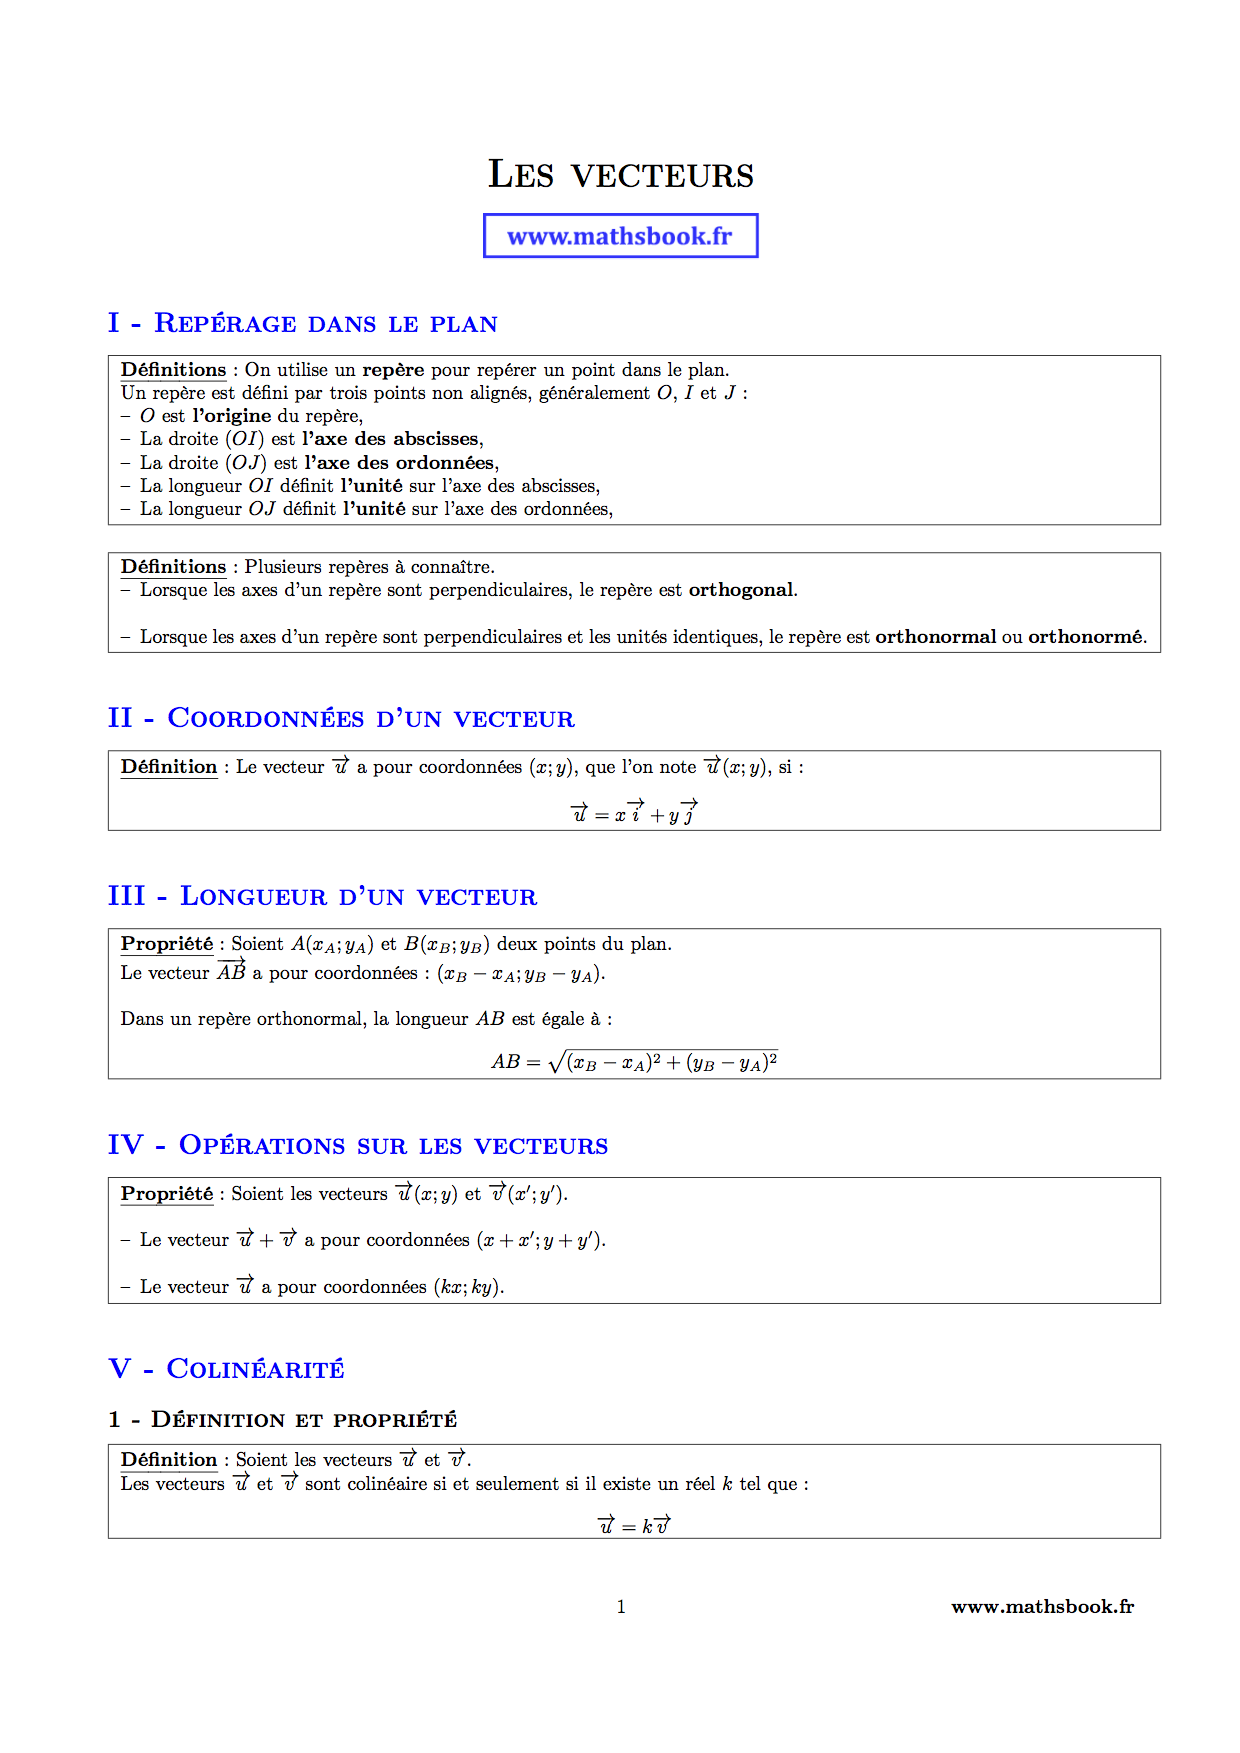 Fiche revision brevet math pdf